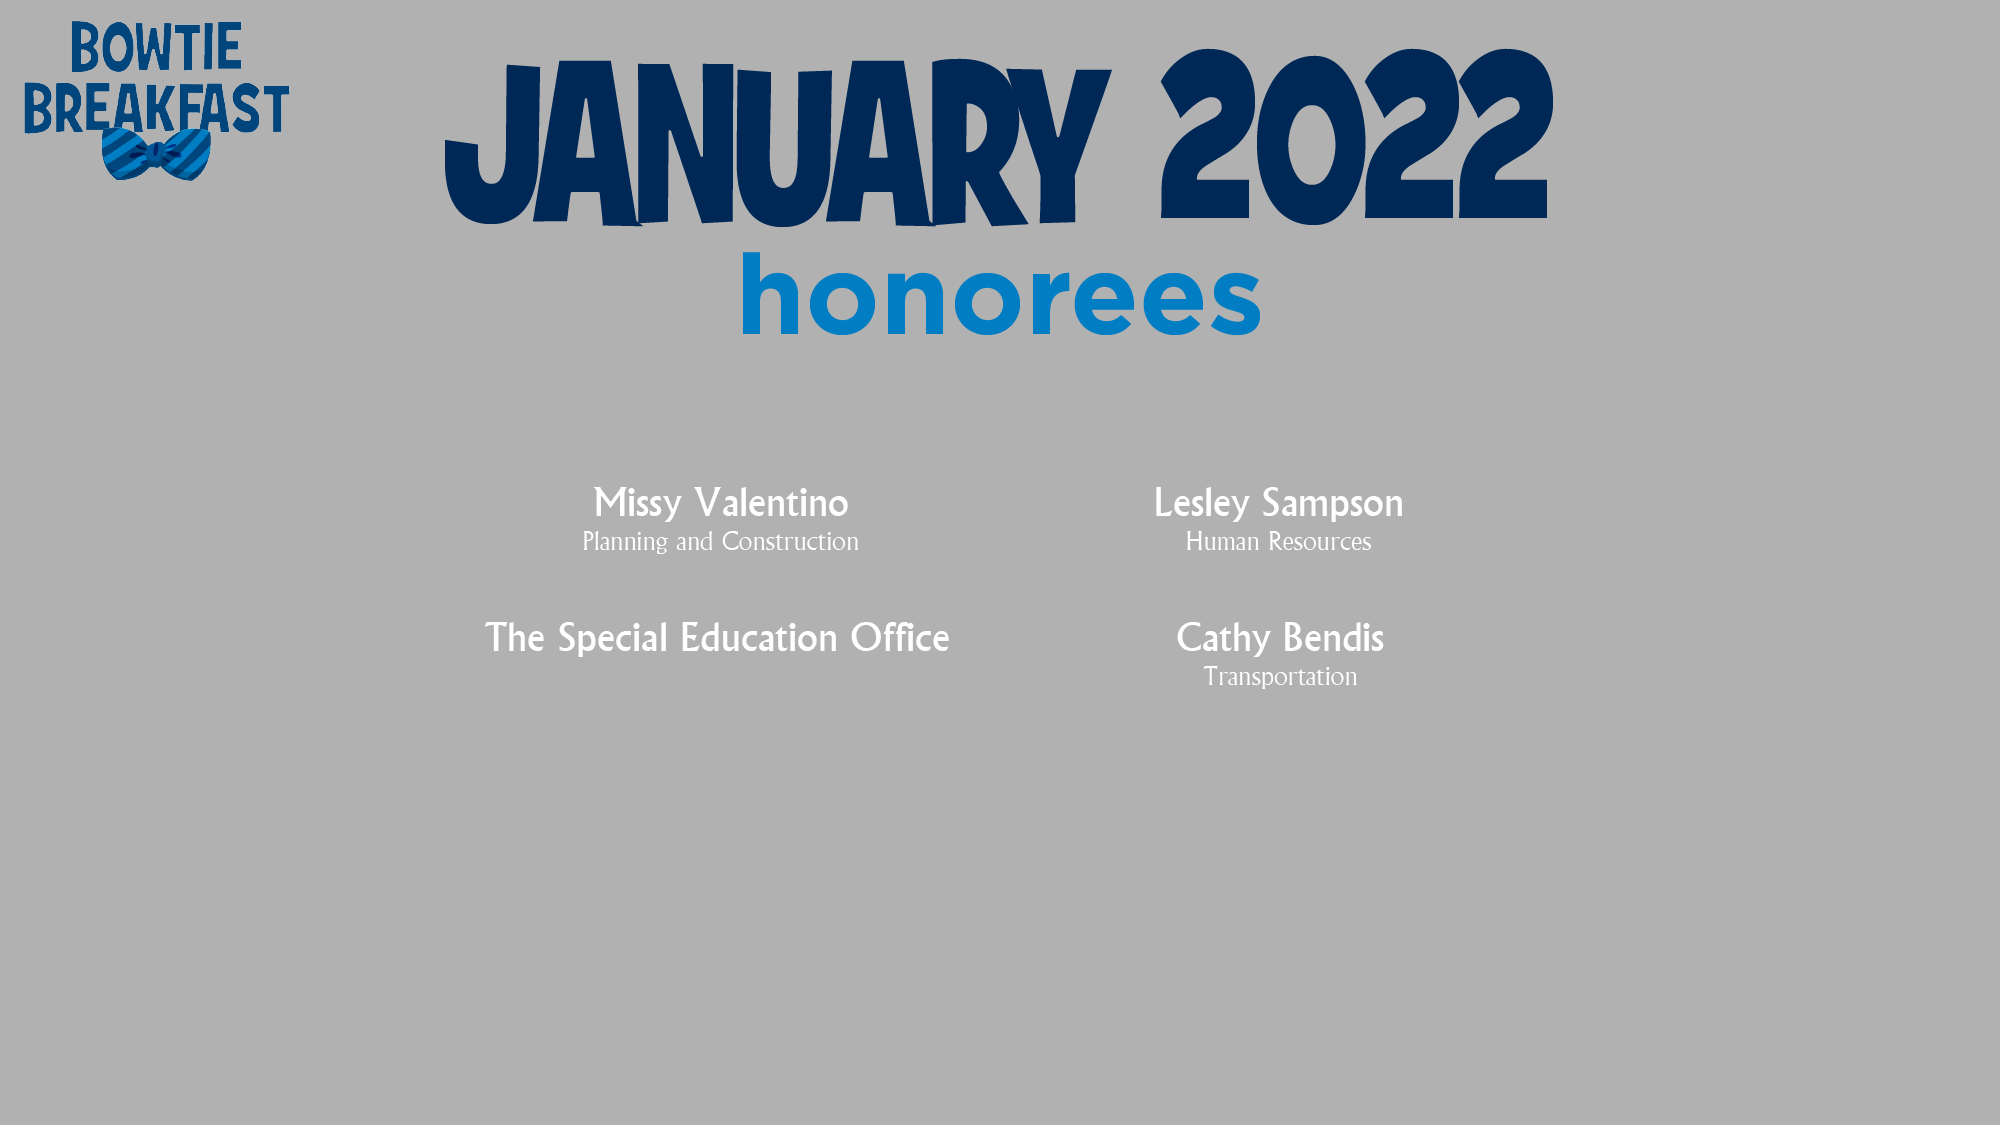 HCPS Bowtie Breakfast Honorees - January 2022